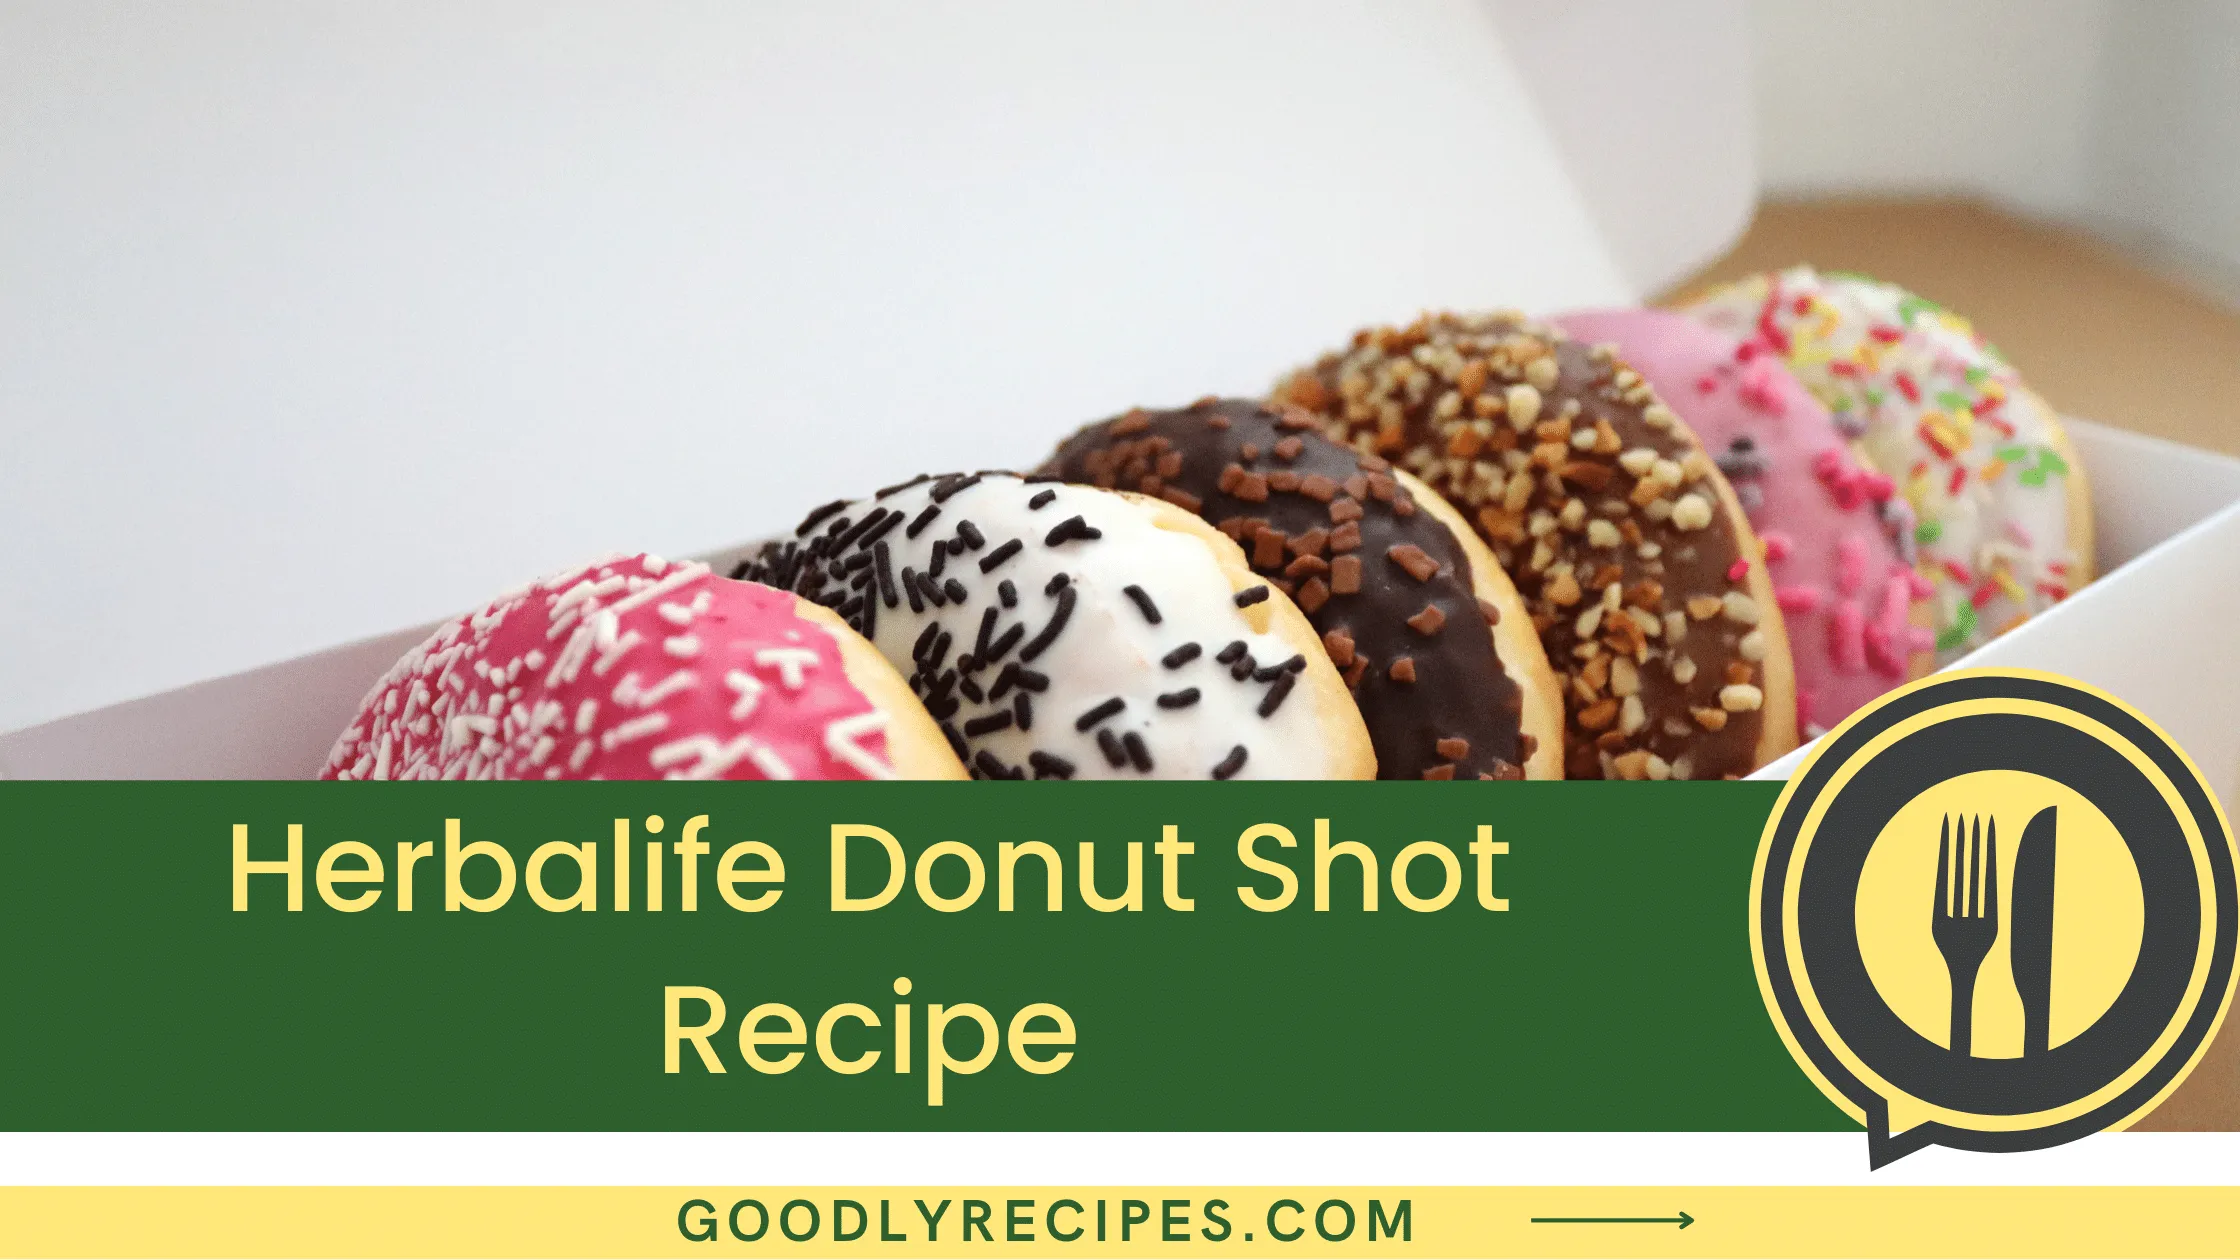 Herbalife Donut Shot Recipe